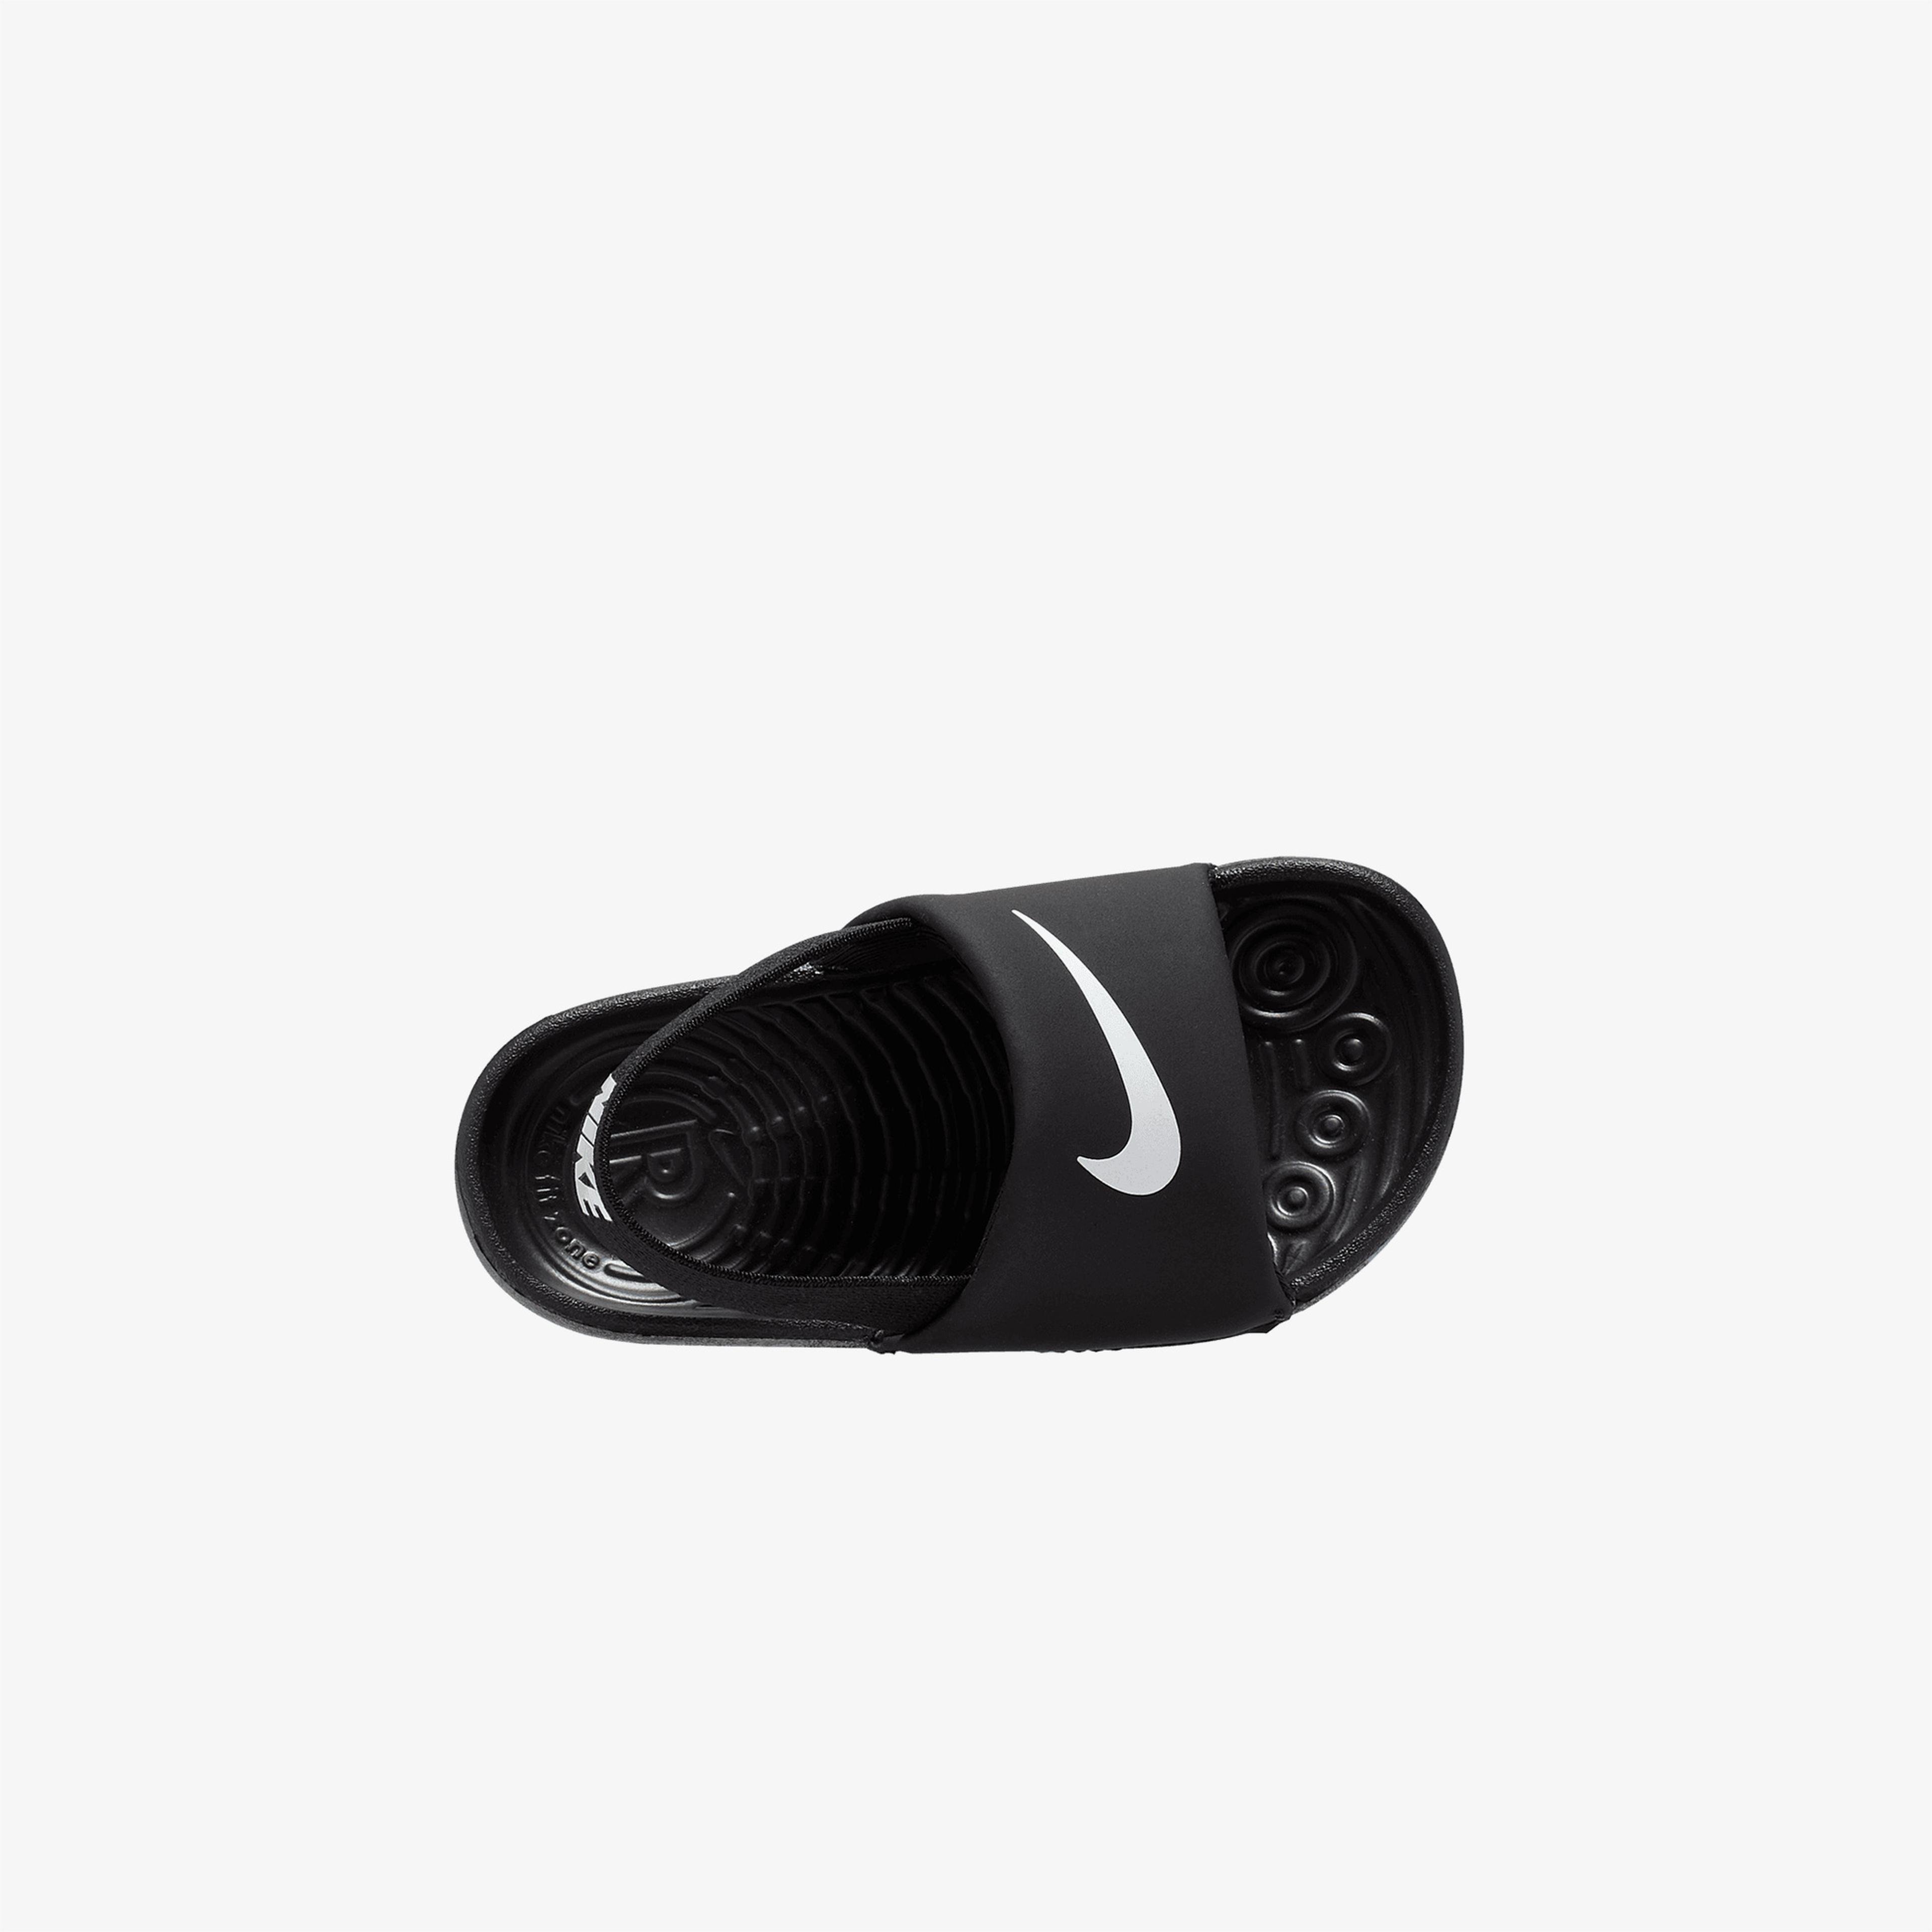 Nike Kawa Bebek Siyah Spor Ayakkabı